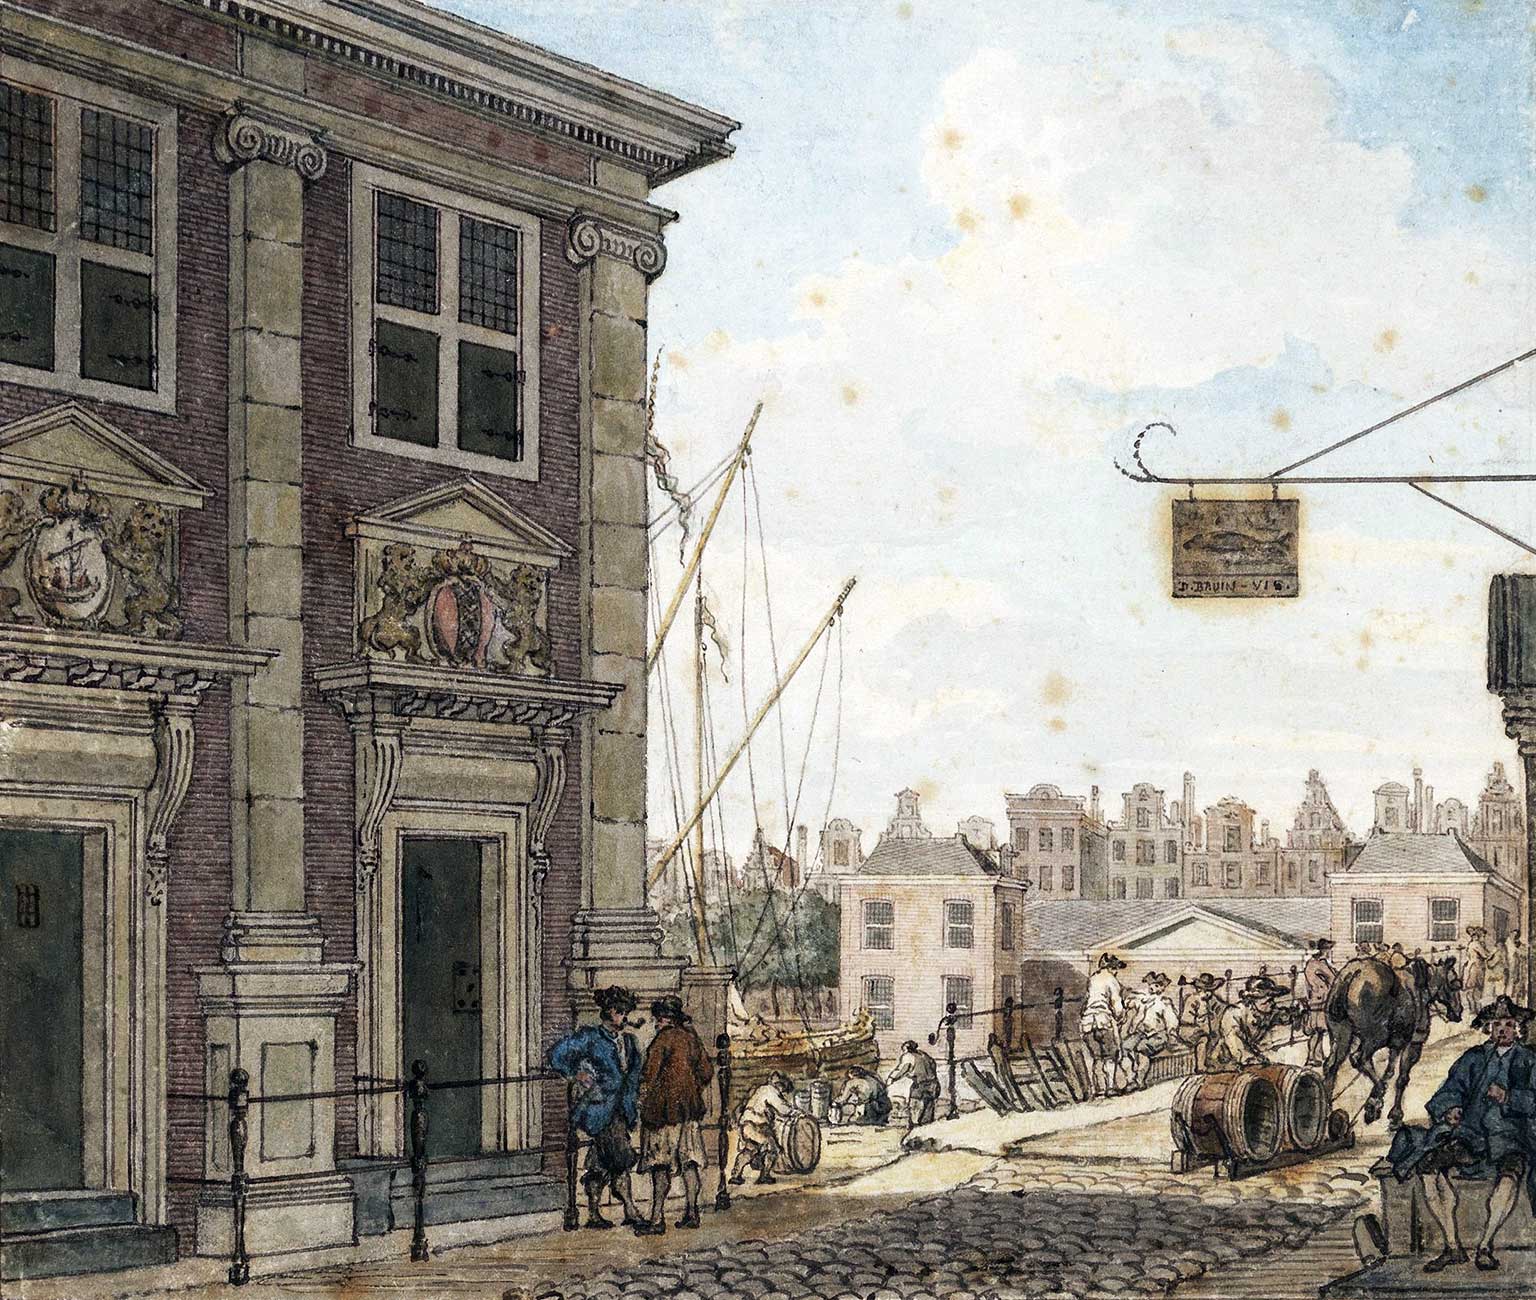 Accijnshuis, Amsterdam, in 1768, seen from Oudebrugsteeg towards Damrak